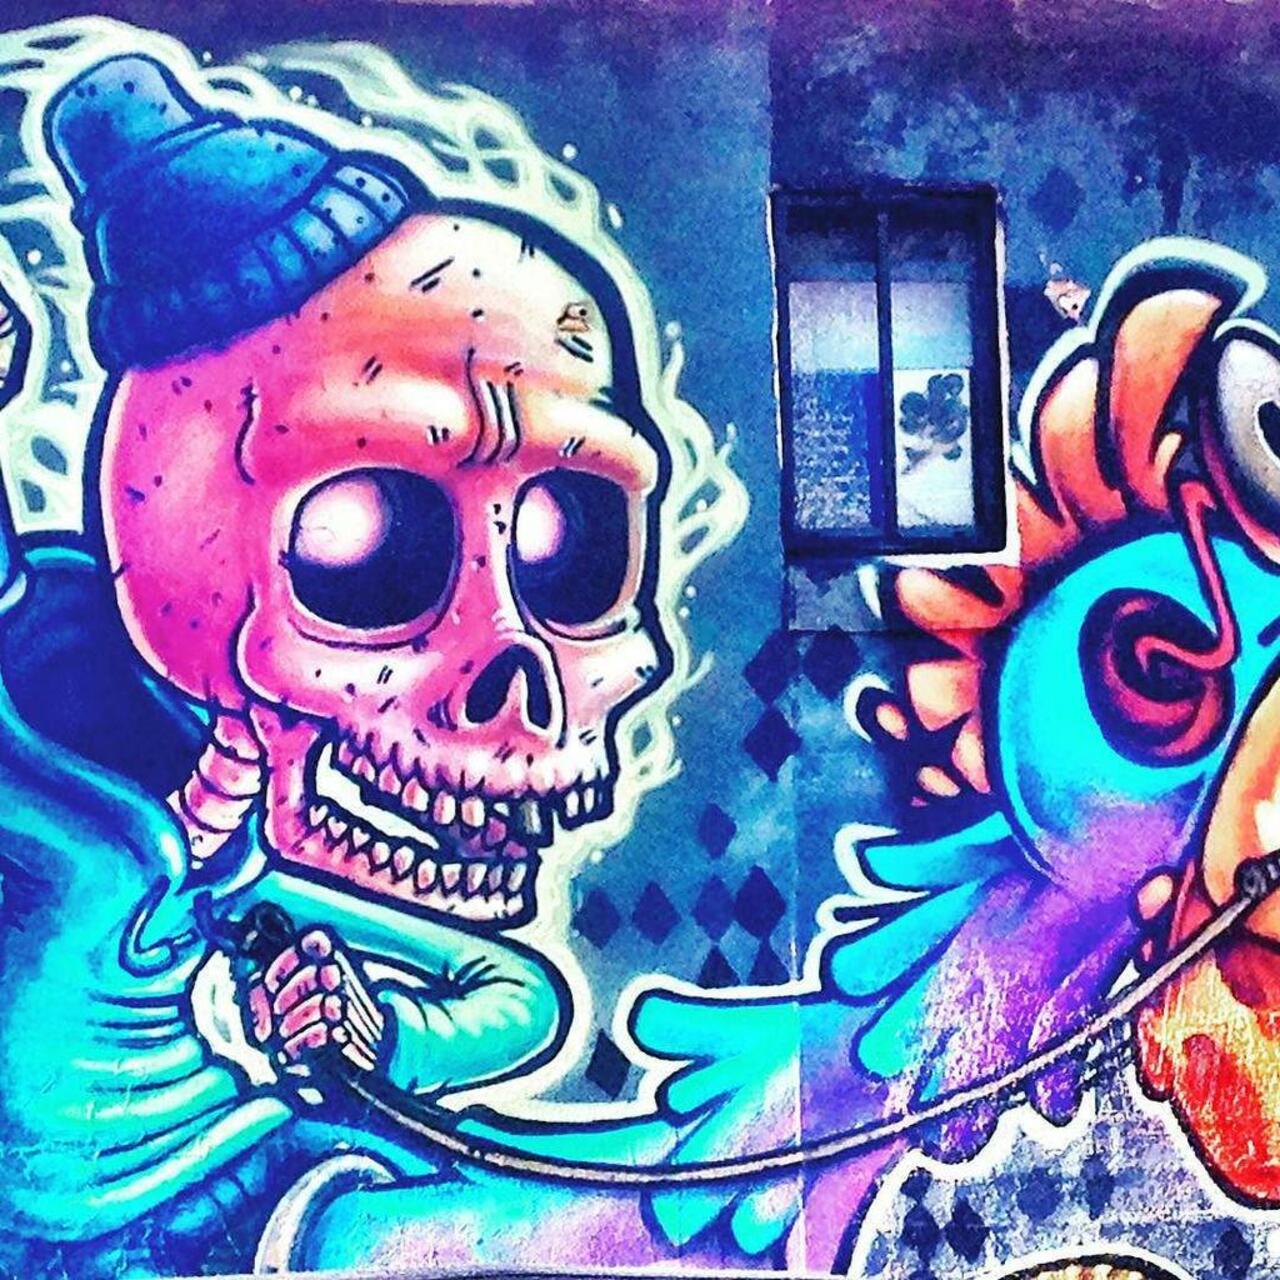 RT @artpushr: via #coco_loco_lee "http://bit.ly/1OpIBdq" #graffiti #streetart http://t.co/i2vtuGYhBm